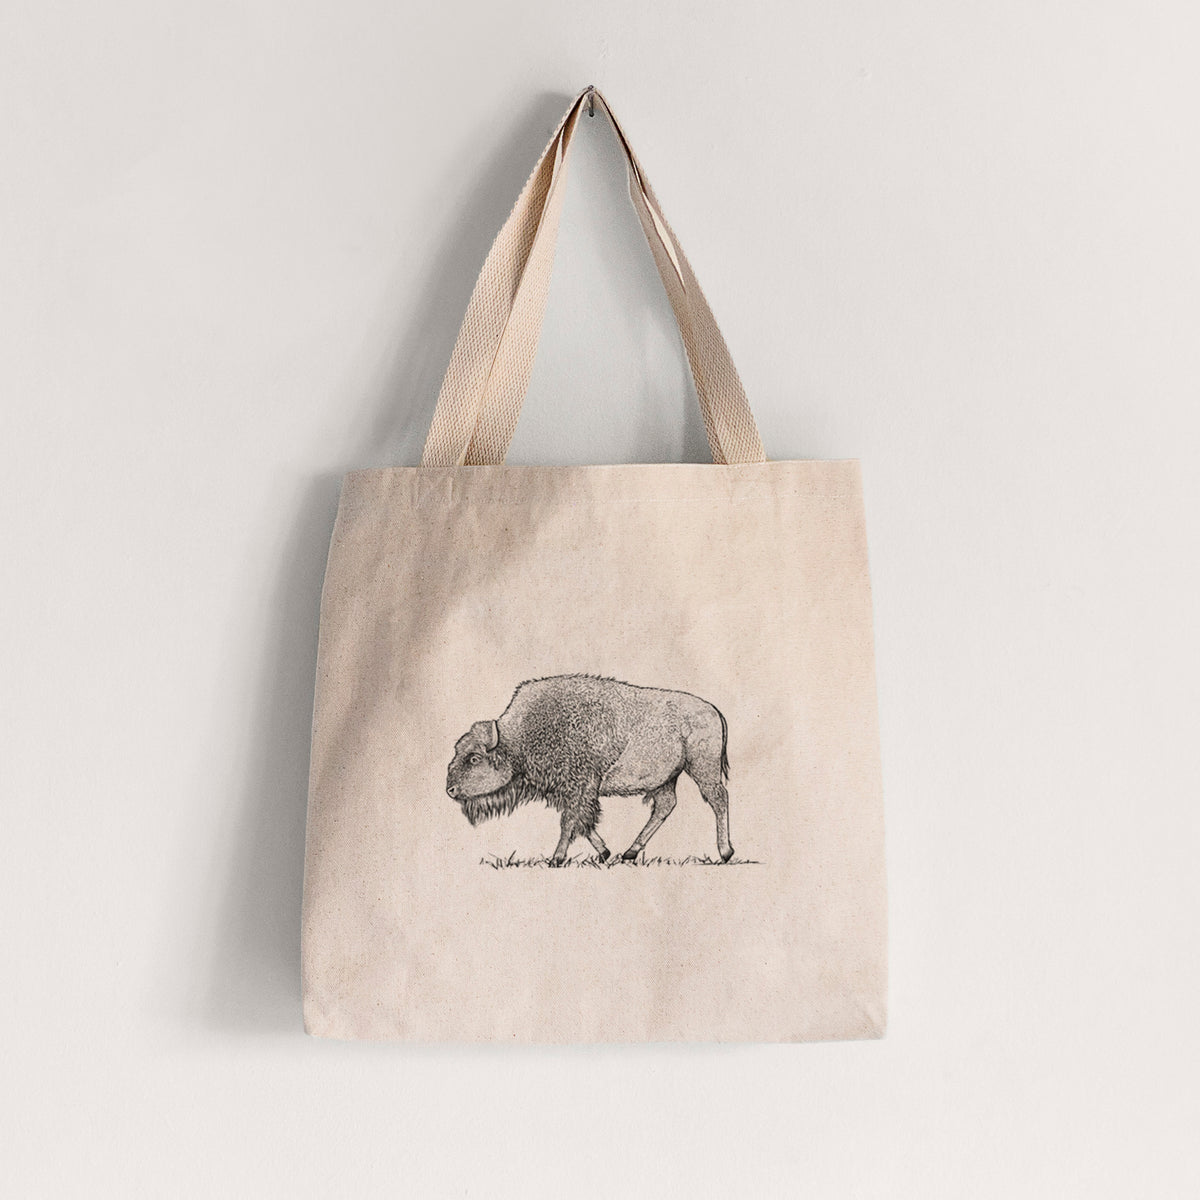 American Bison / Buffalo - Bison bison - Tote Bag